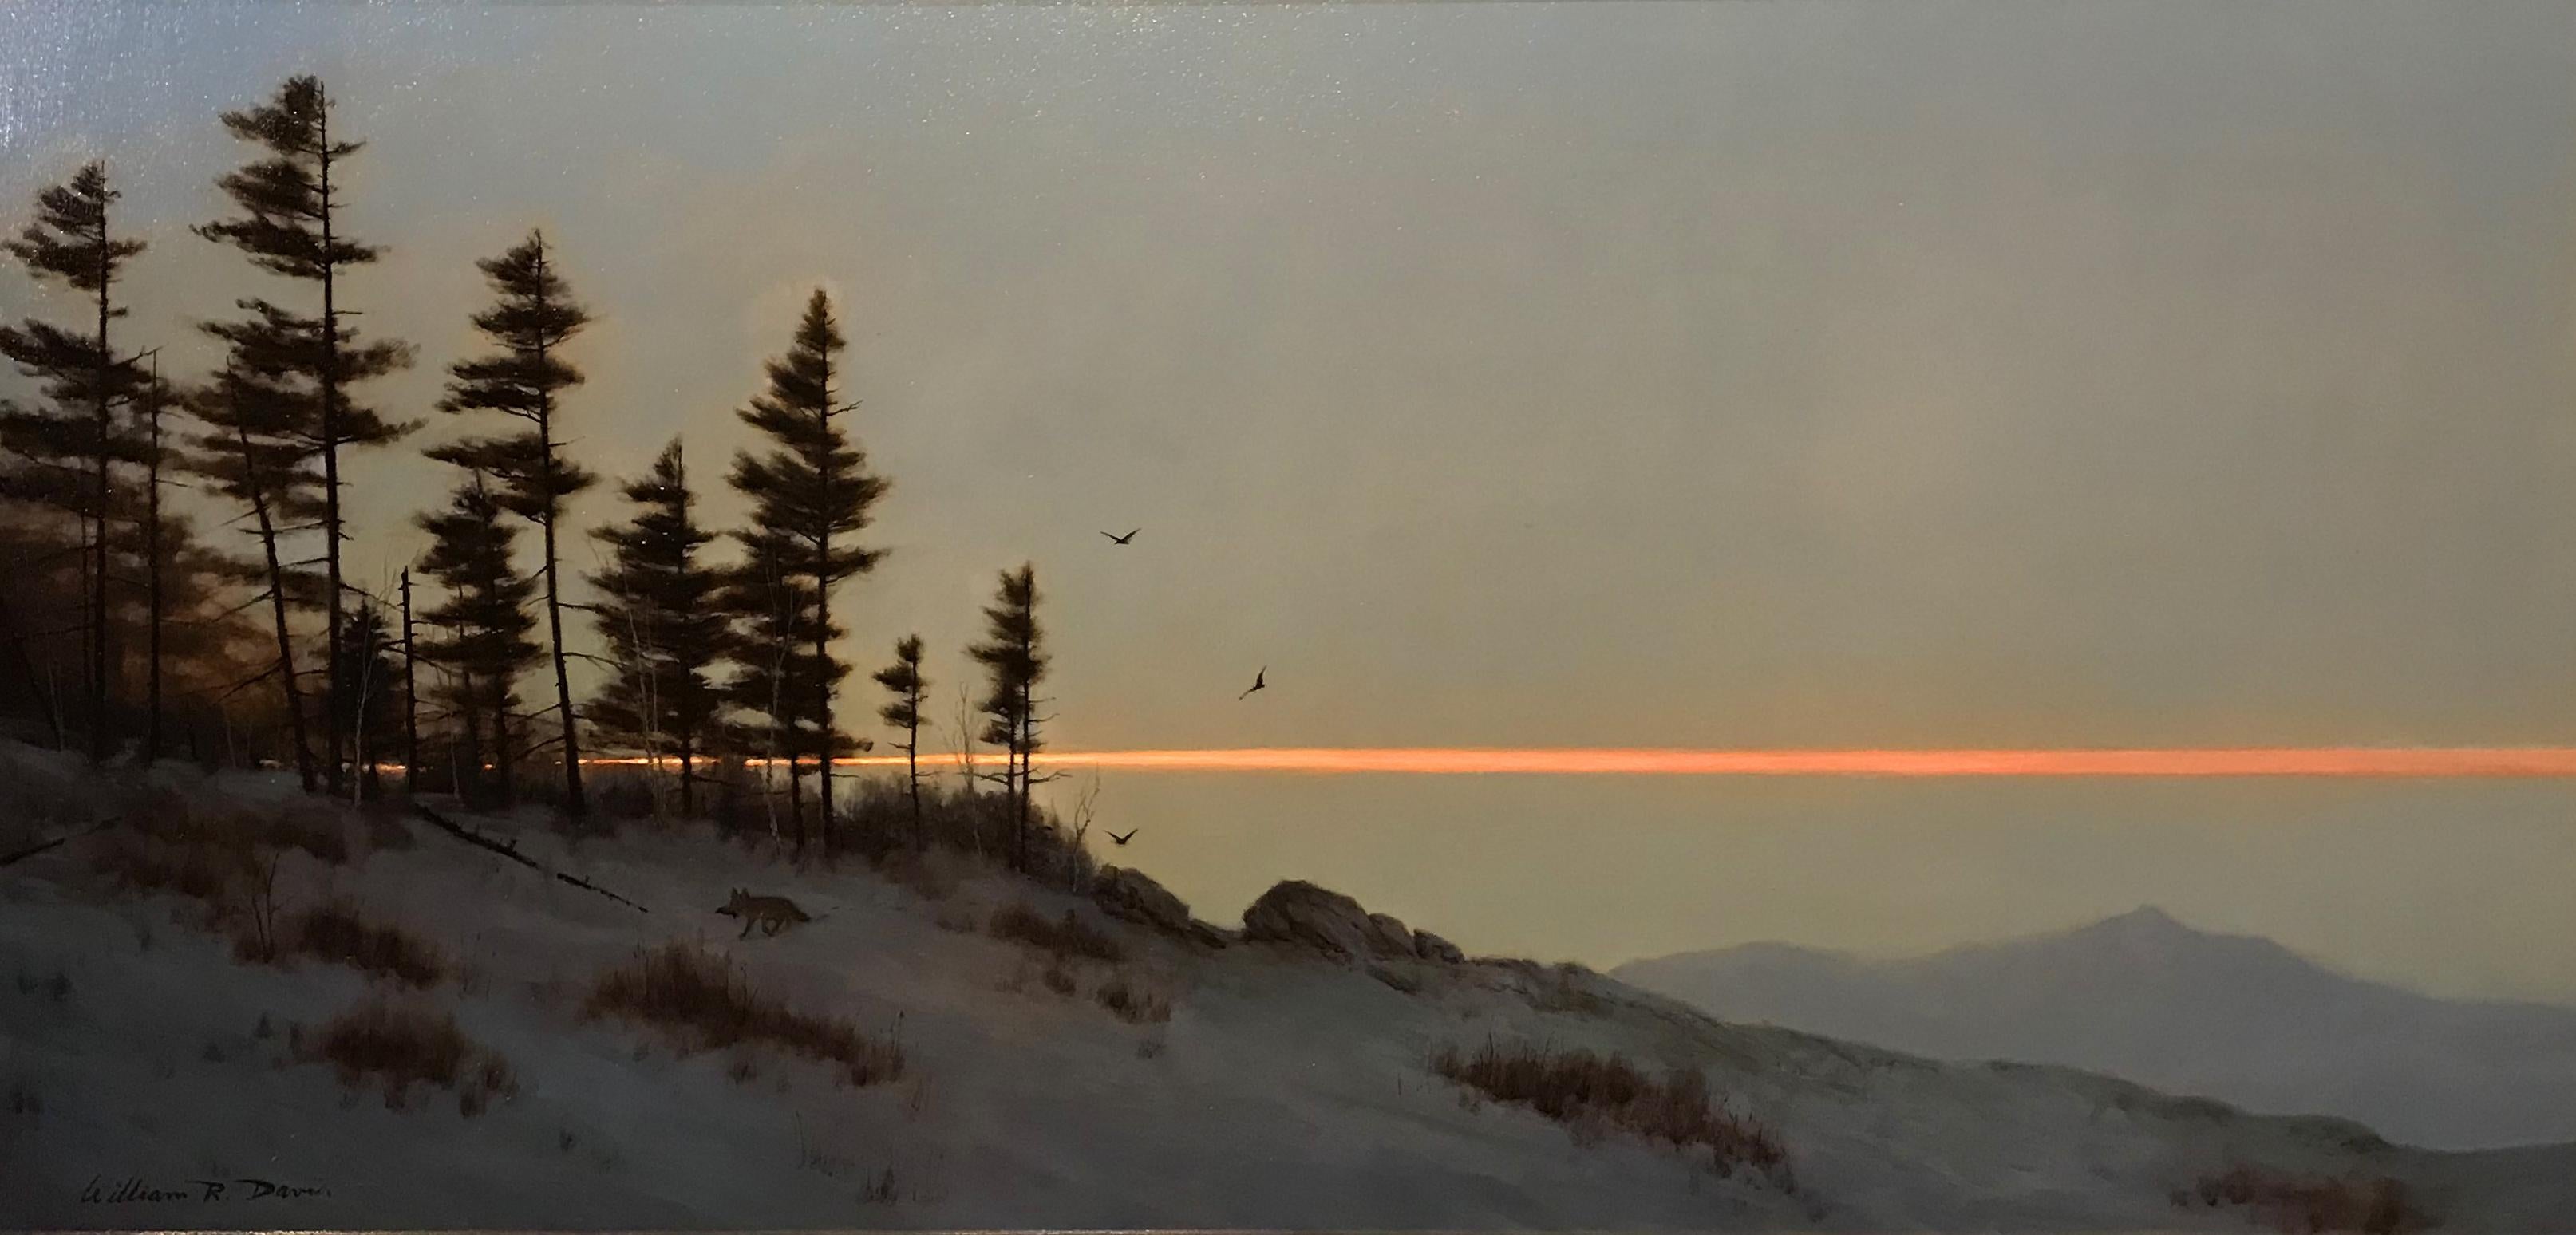 Chocorua à Twilight - Painting de William R. Davis